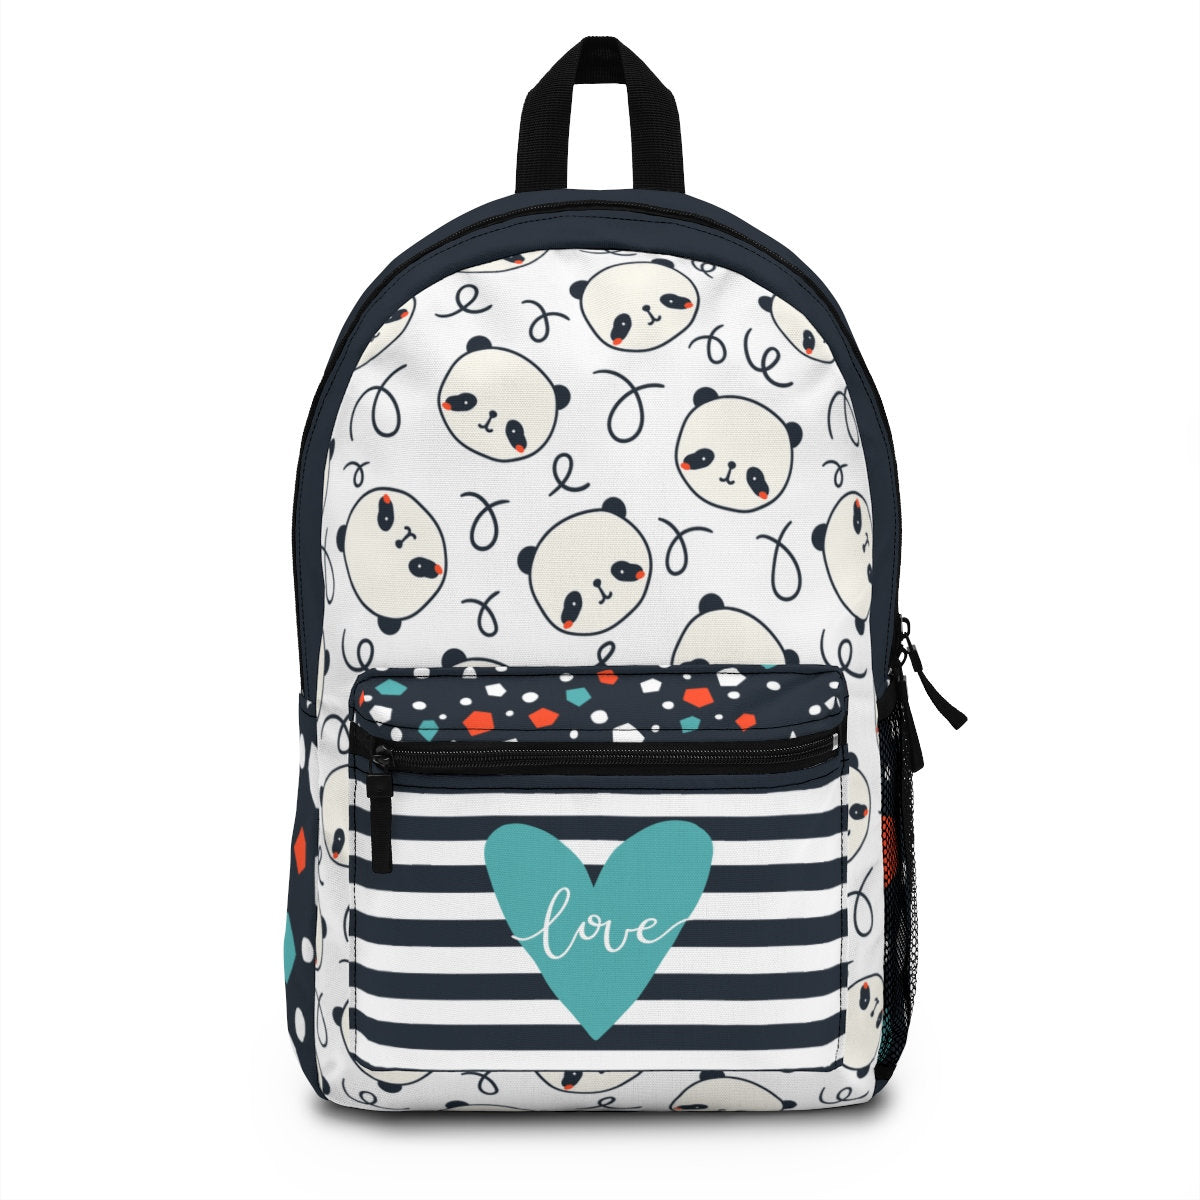 Panda Bear Backpack (Made in USA), Backpacks, Back to School, School Bag, Back to School Backpack, Pre-K, Personalized Bag, Kid's Backpack